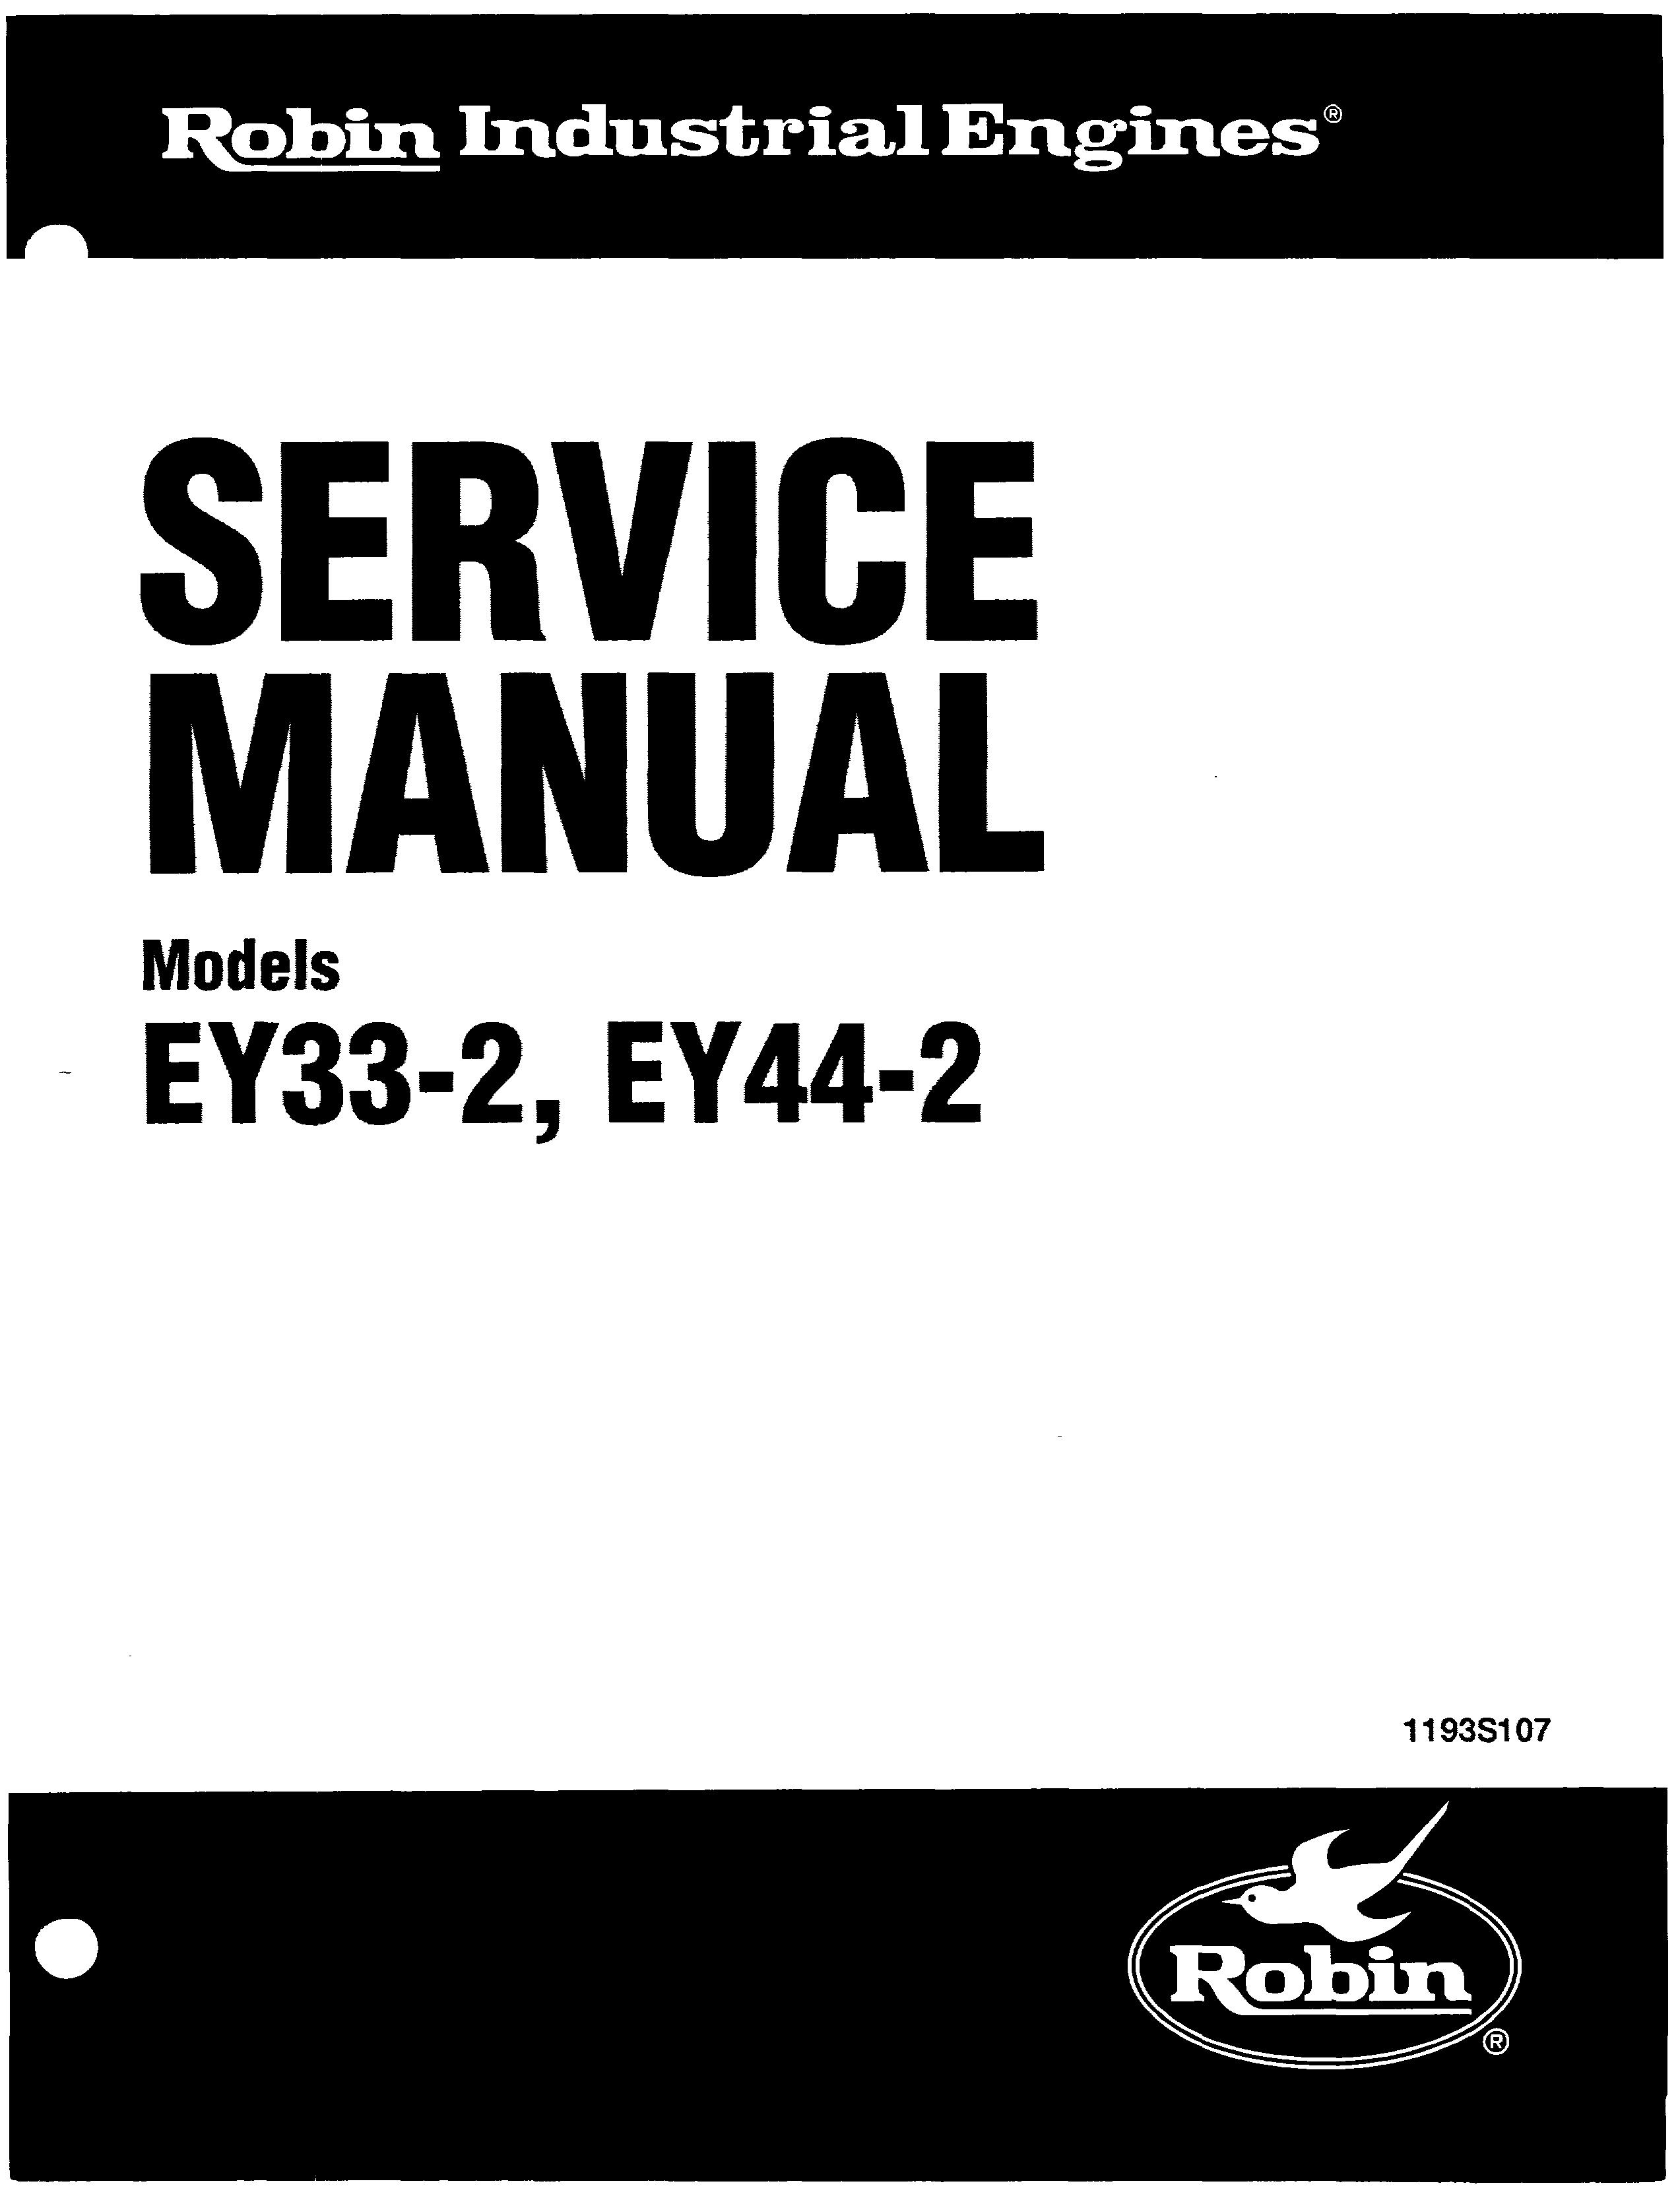 Subaru Robin Power Products EY44-2 Portable Generator User Manual